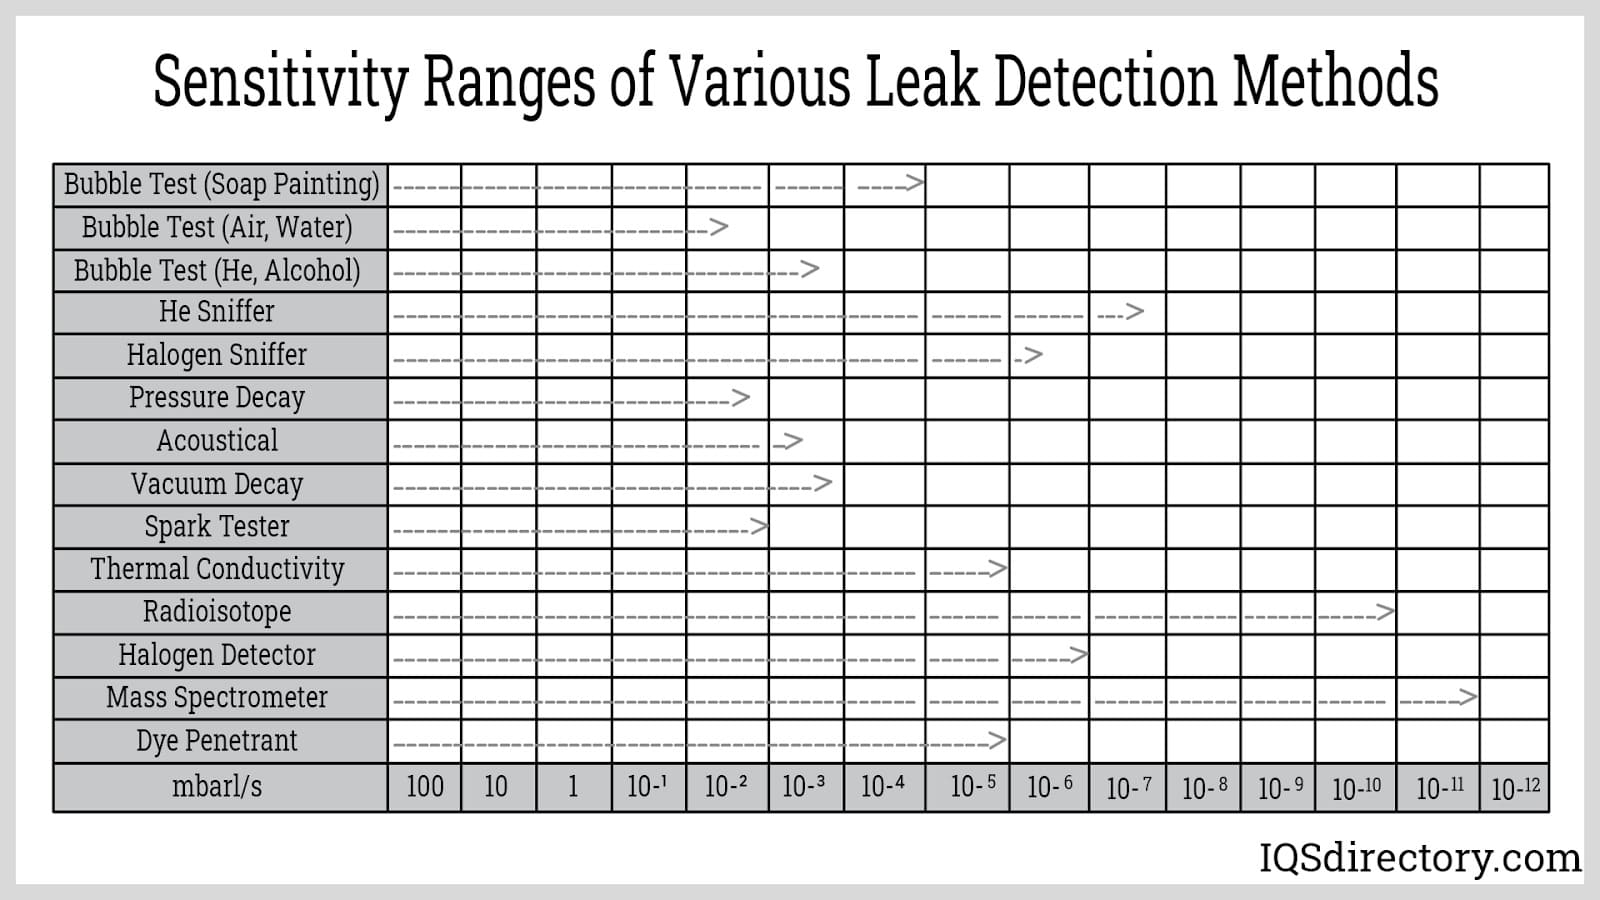 Sensitivity Ranges of Various Leak Detection Methods